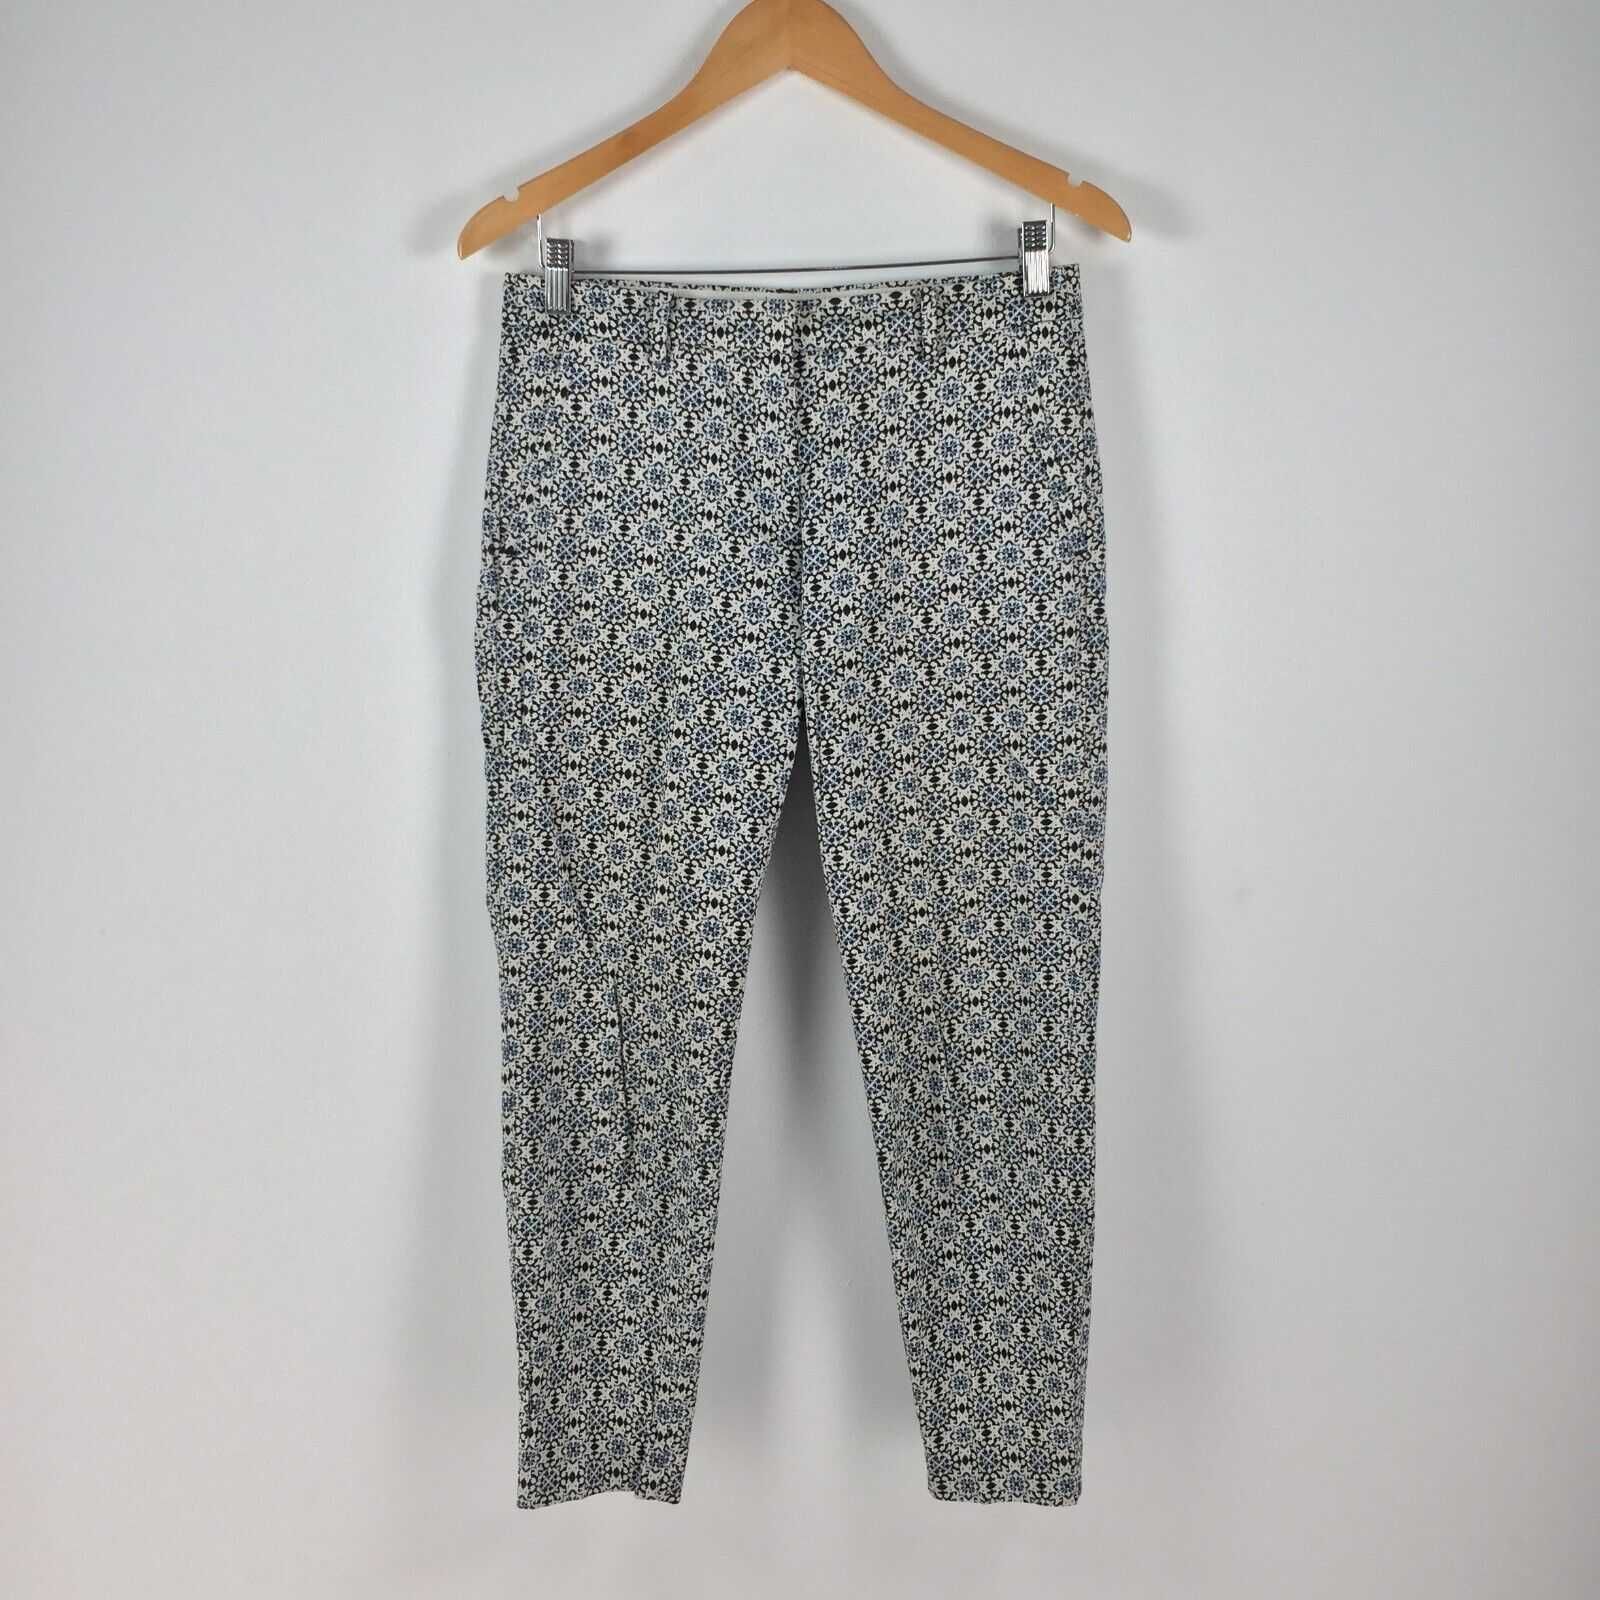 H&M spodnie cygaretki multicolor print  38